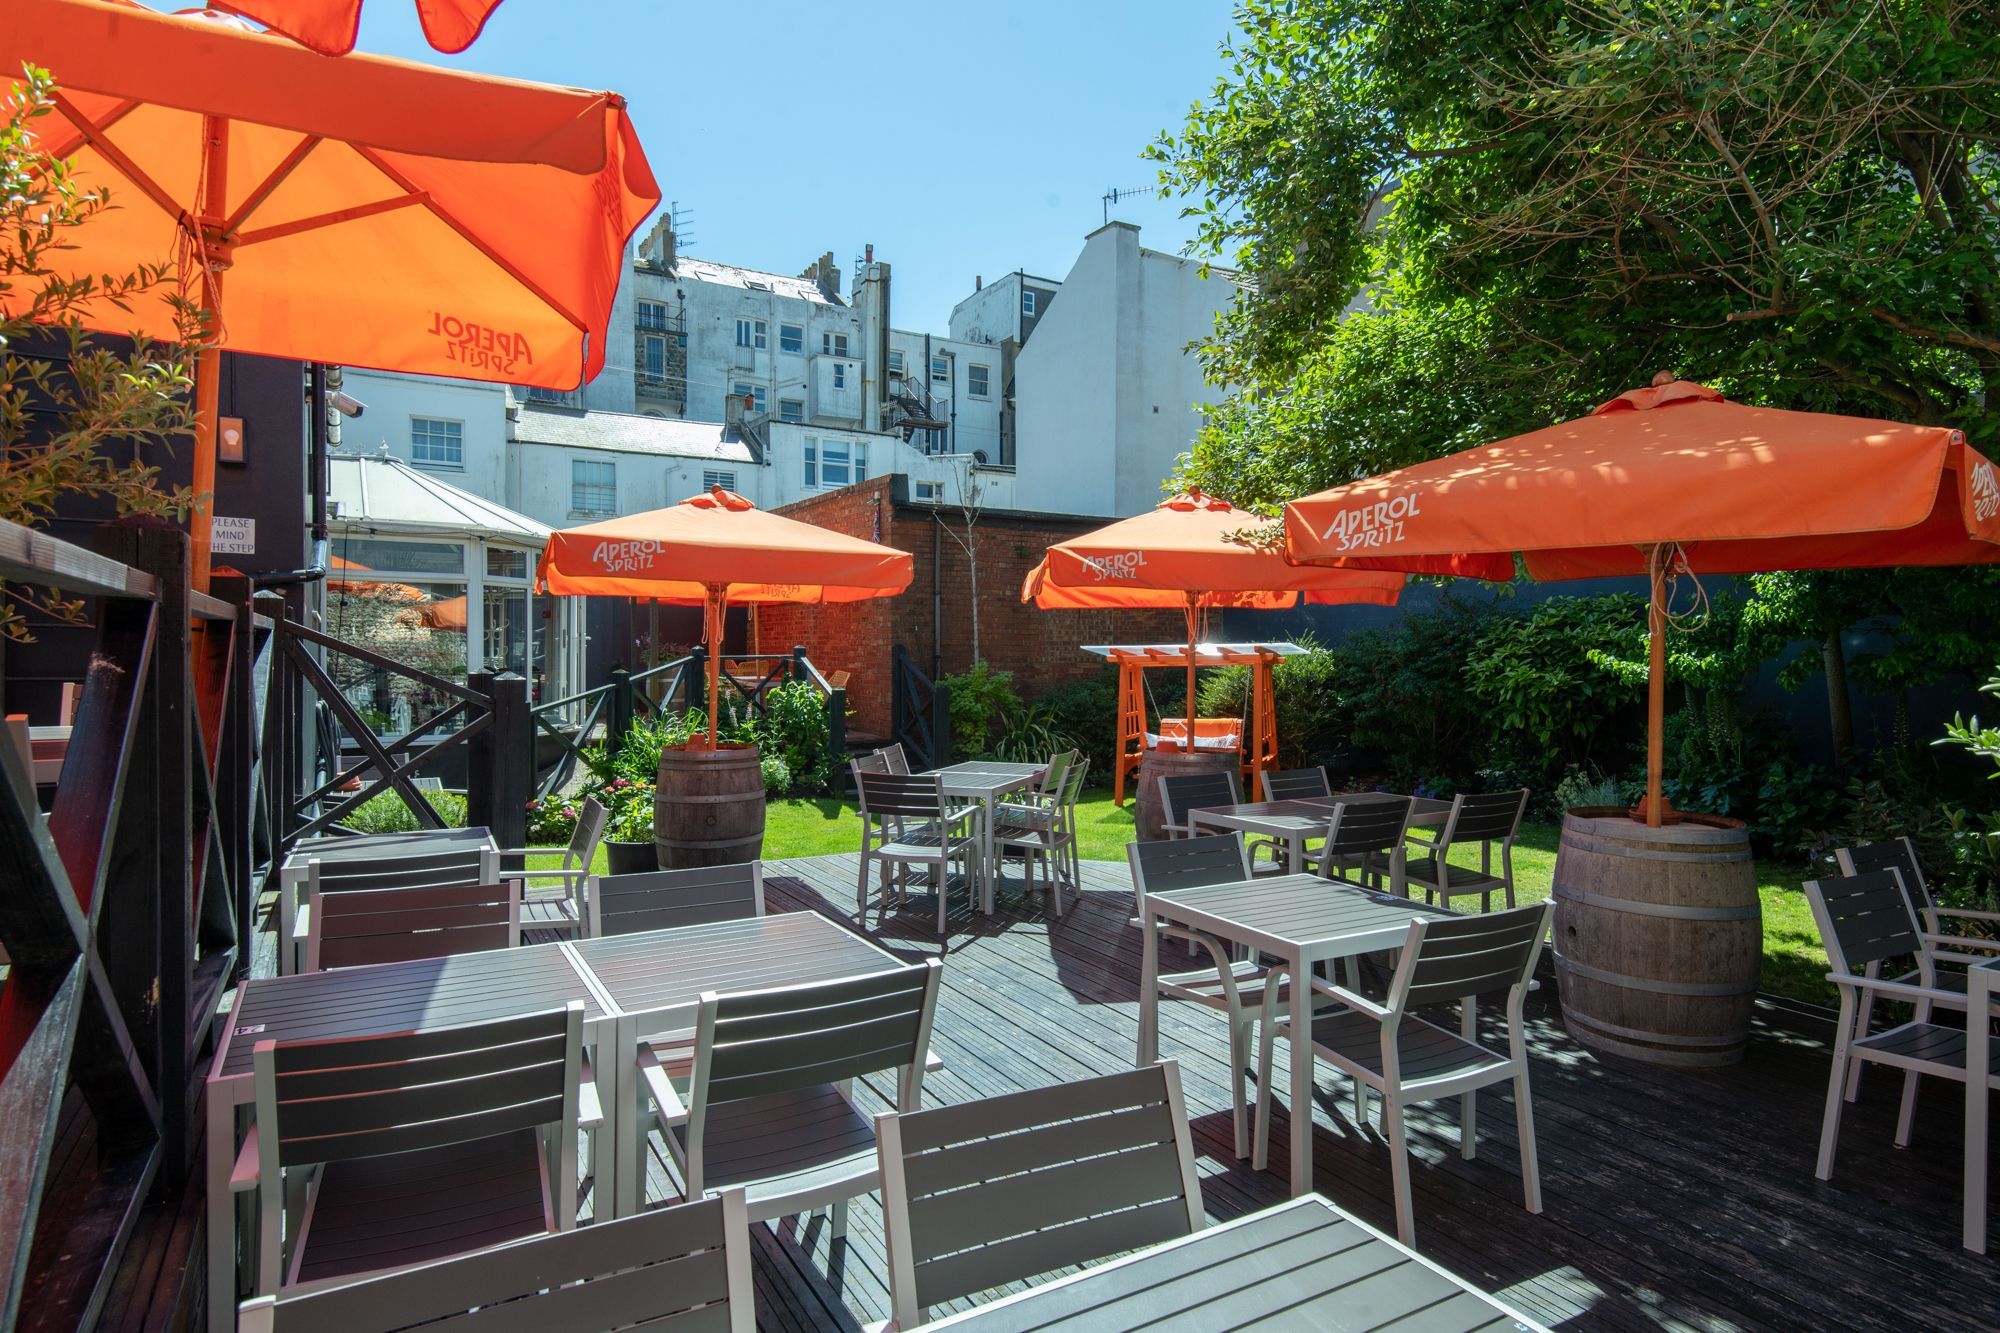 beautiful beer garden at daddylonglegs, grey chairs and tables, orange parasols